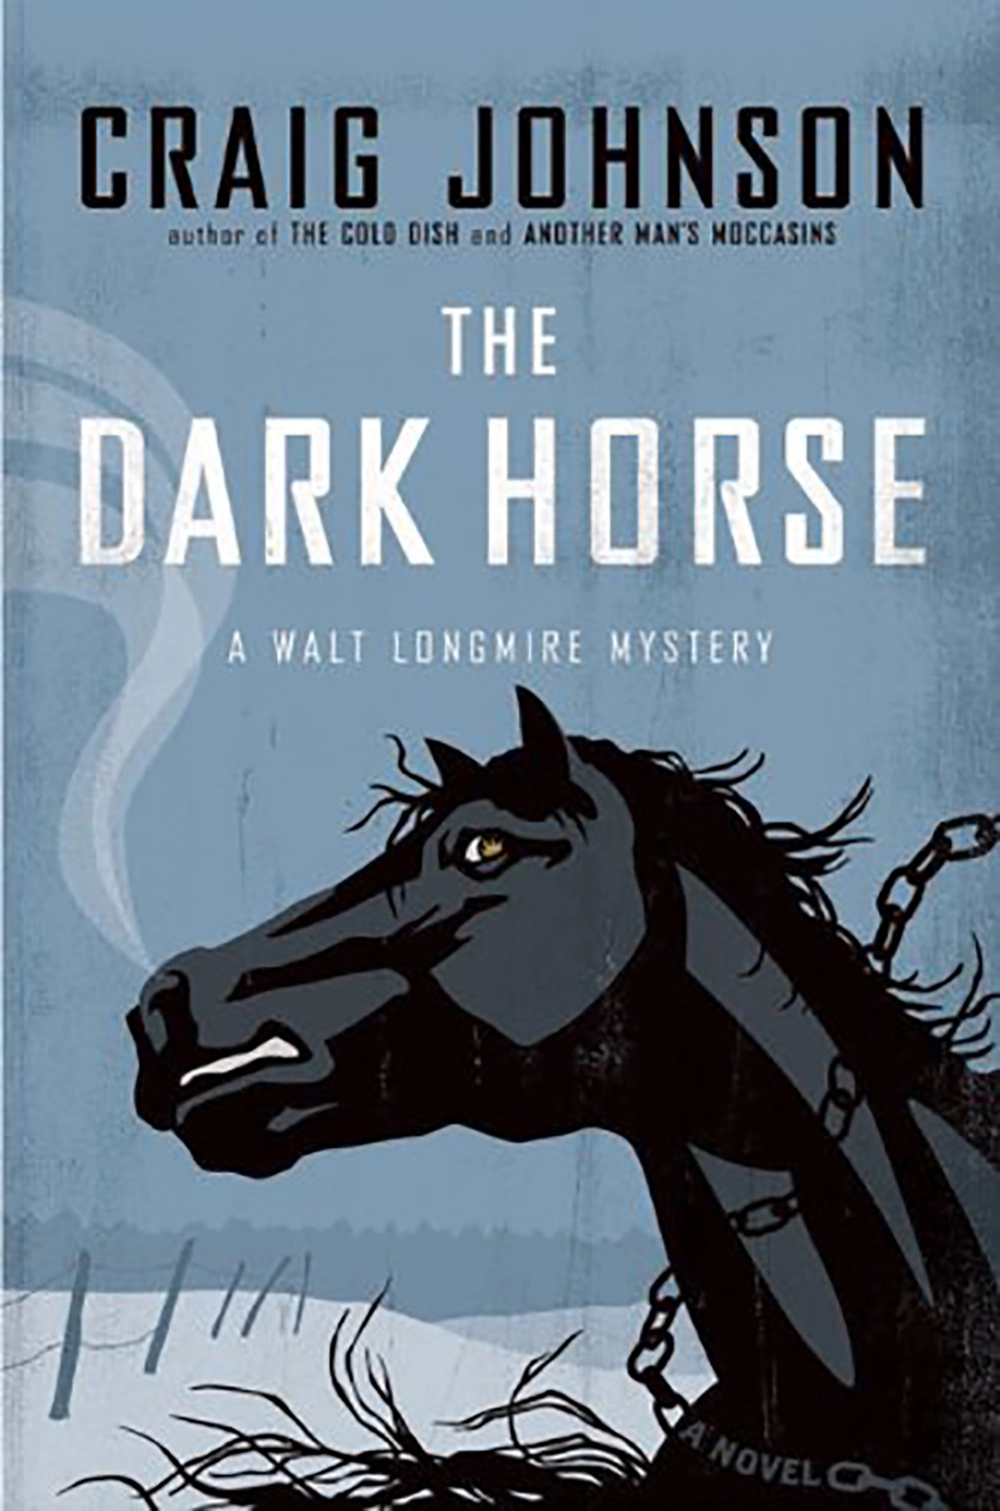 The Dark Horse, Johnson's fifth book.